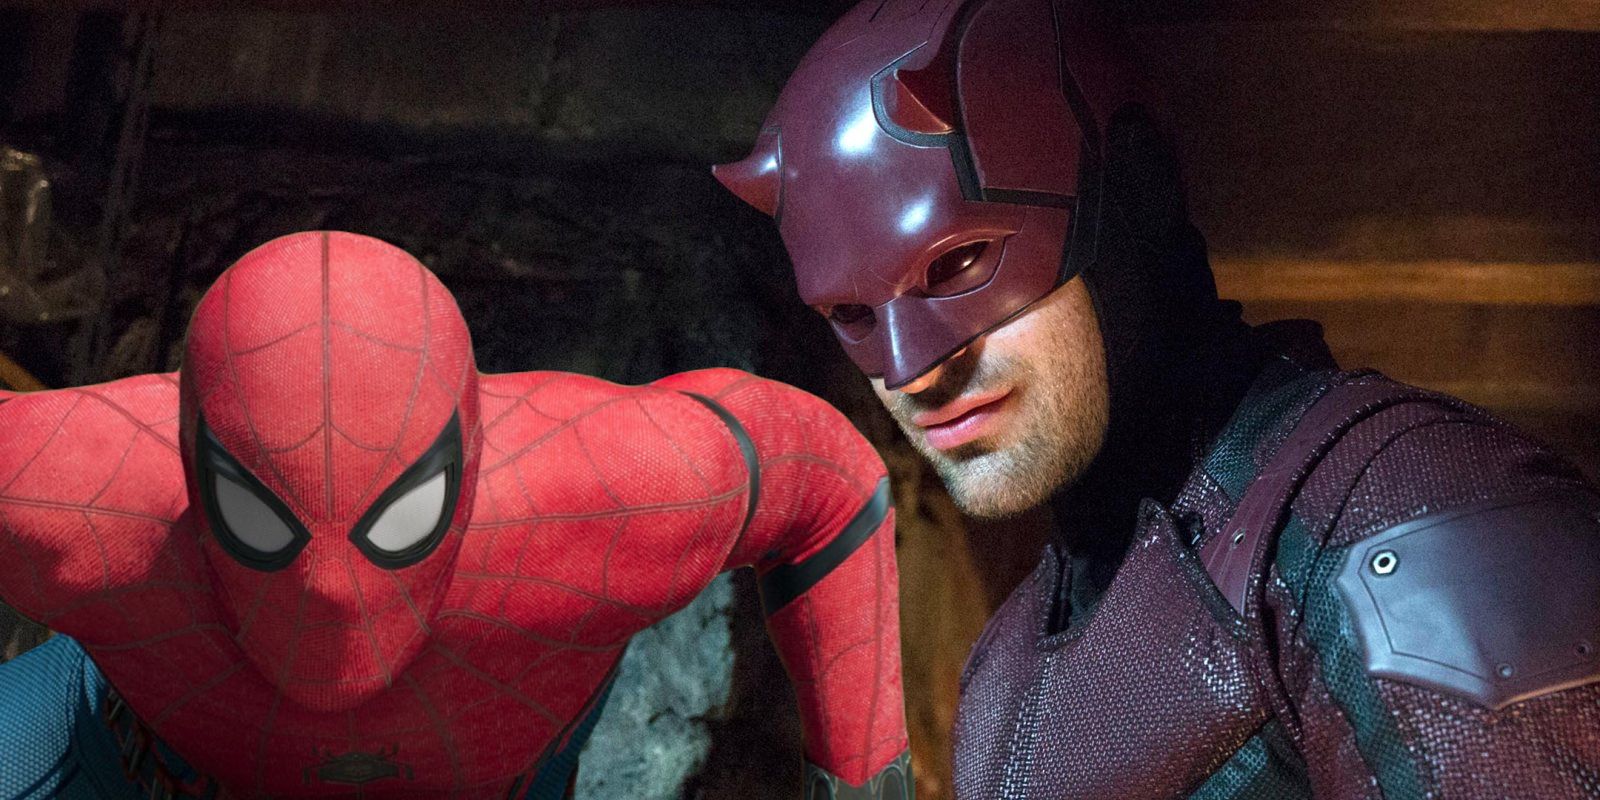 Spider Man and Daredevil